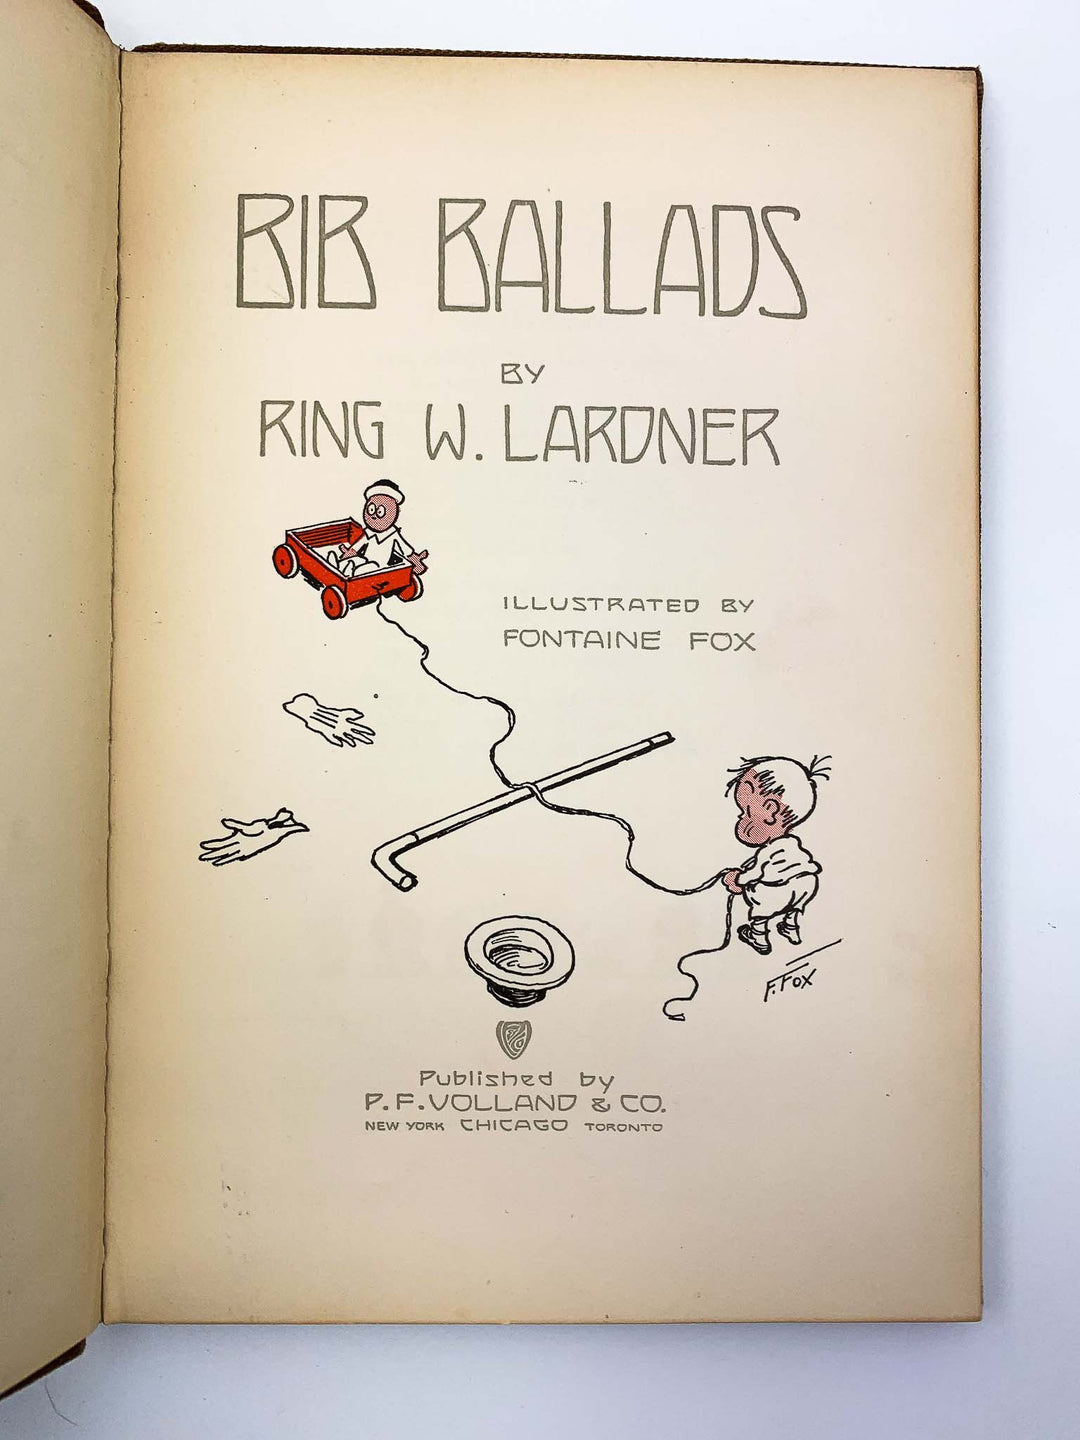 Lardner, Ring W - Bib Ballads | sample illustration